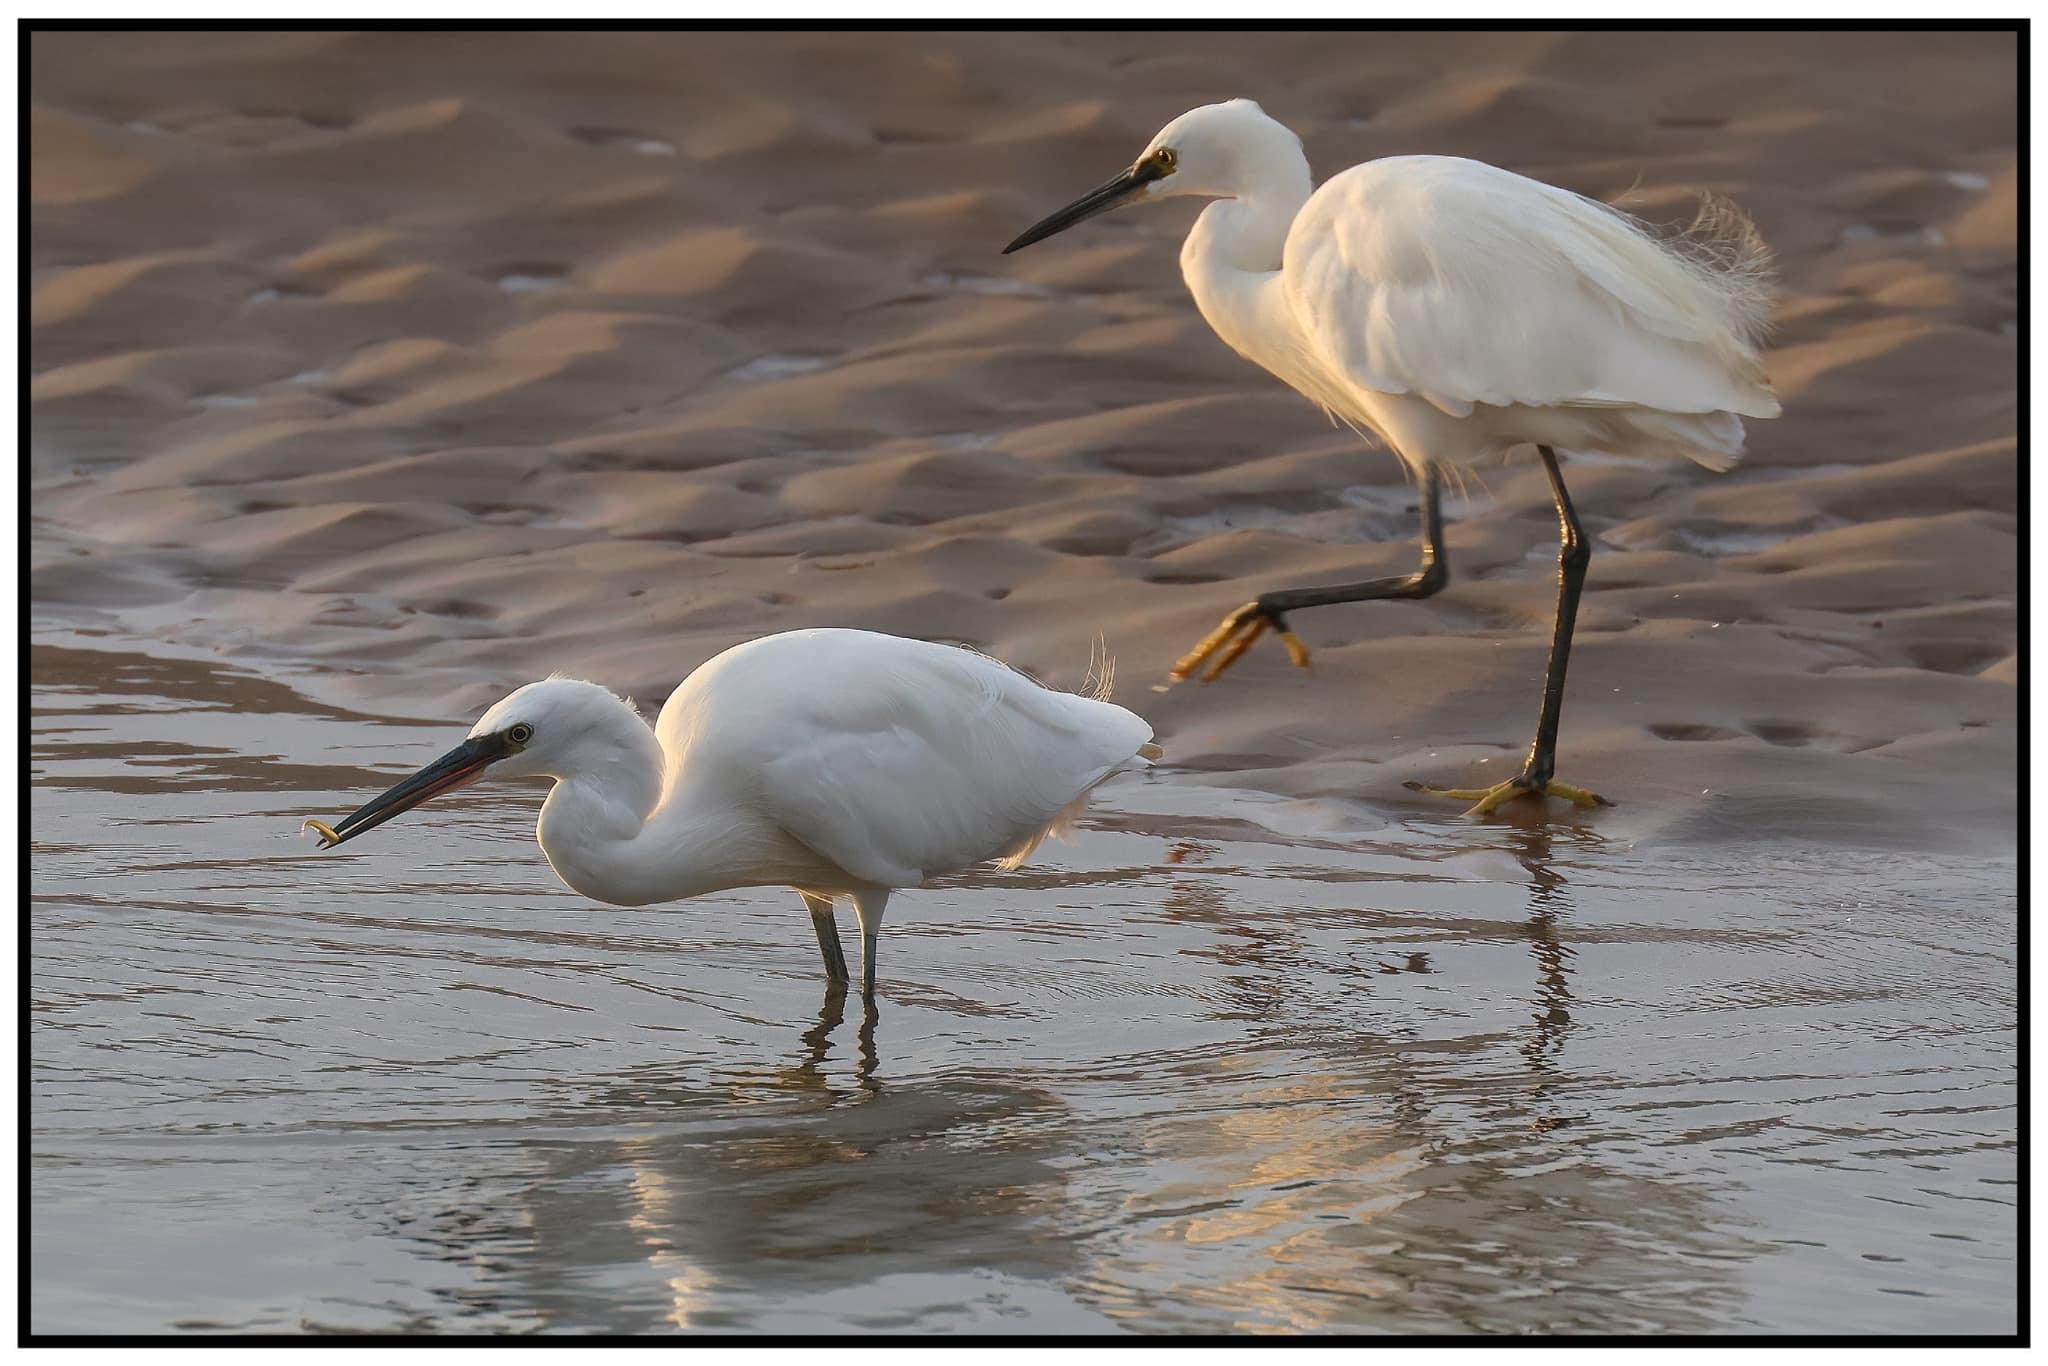 Two fishing egrets by Tom Mundy